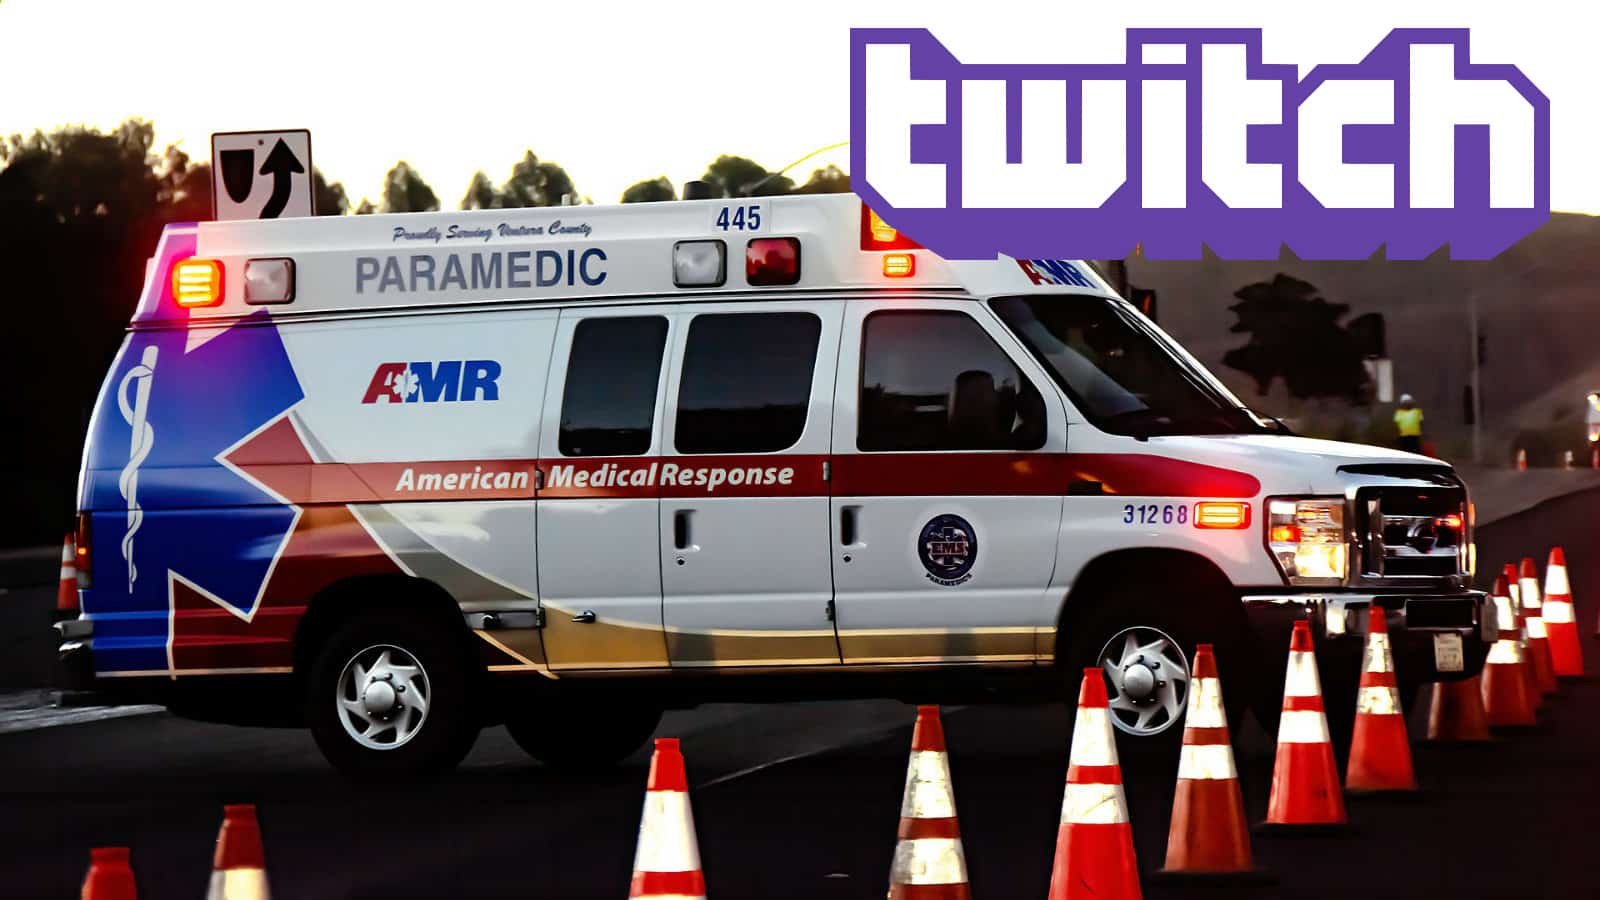 Ambulance with Twitch logo